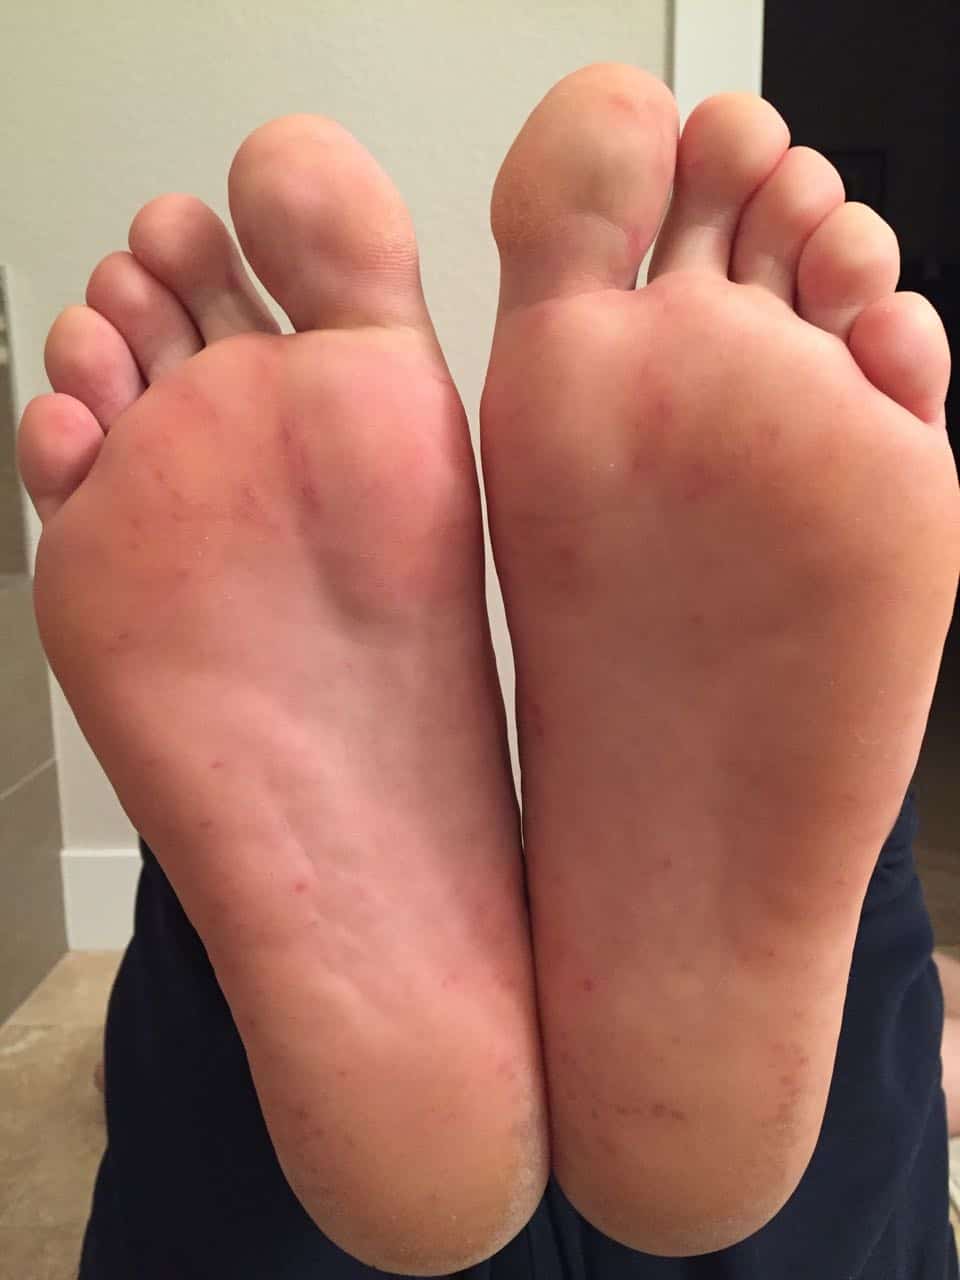 Feet Tuesday